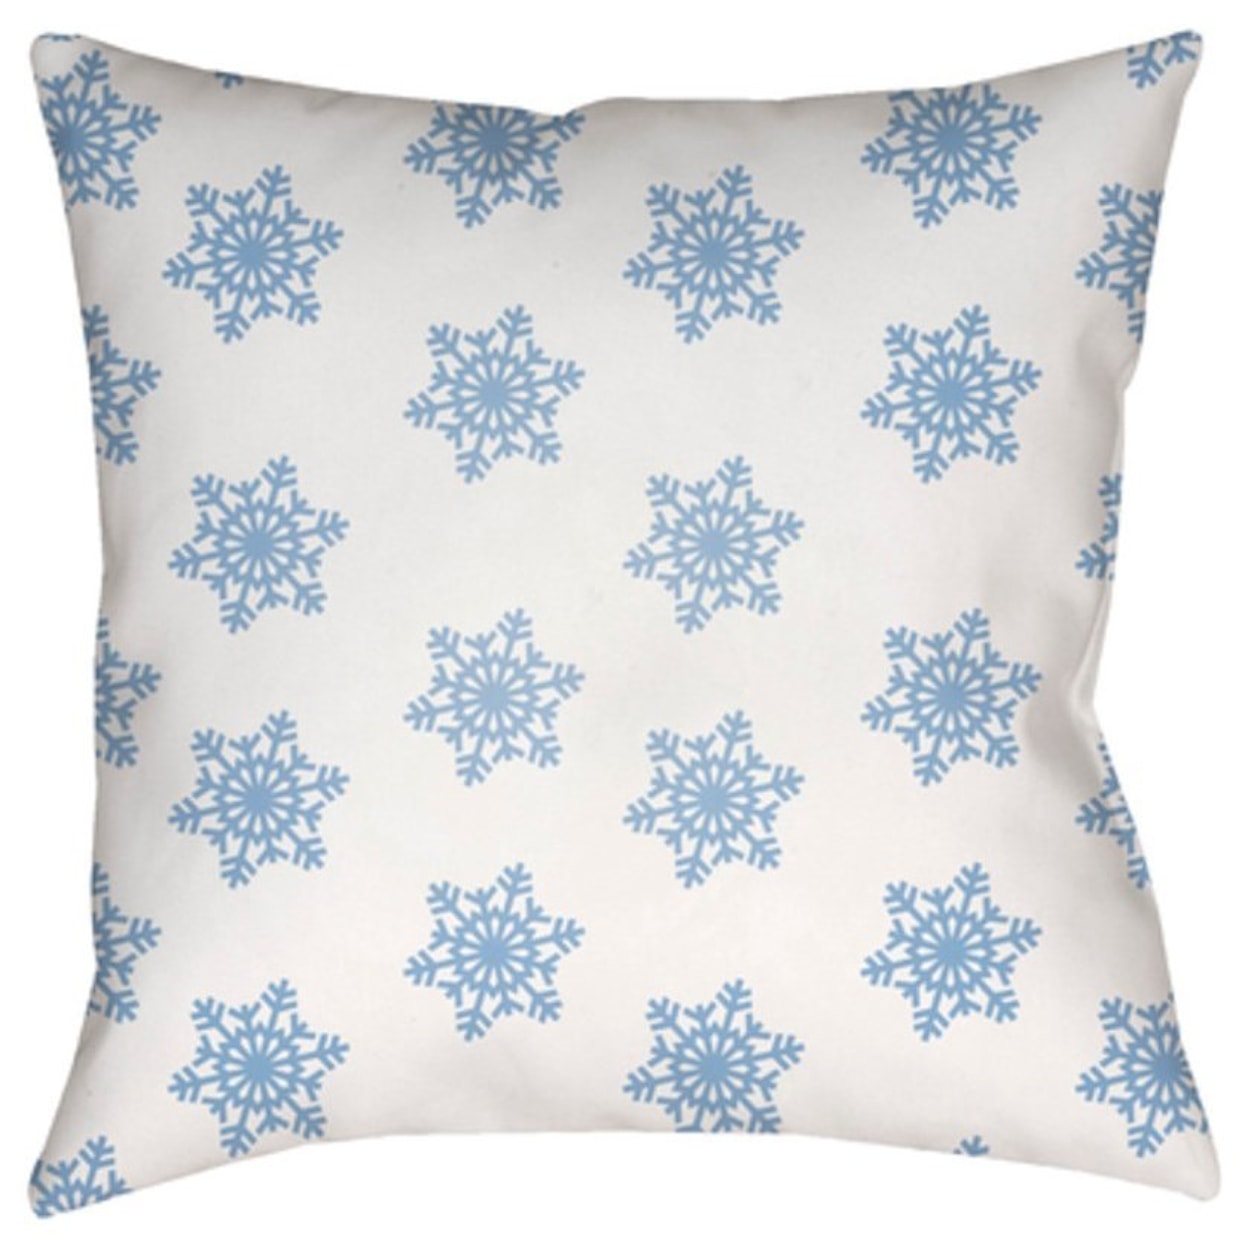 Surya Rugs Snowflakes Pillow